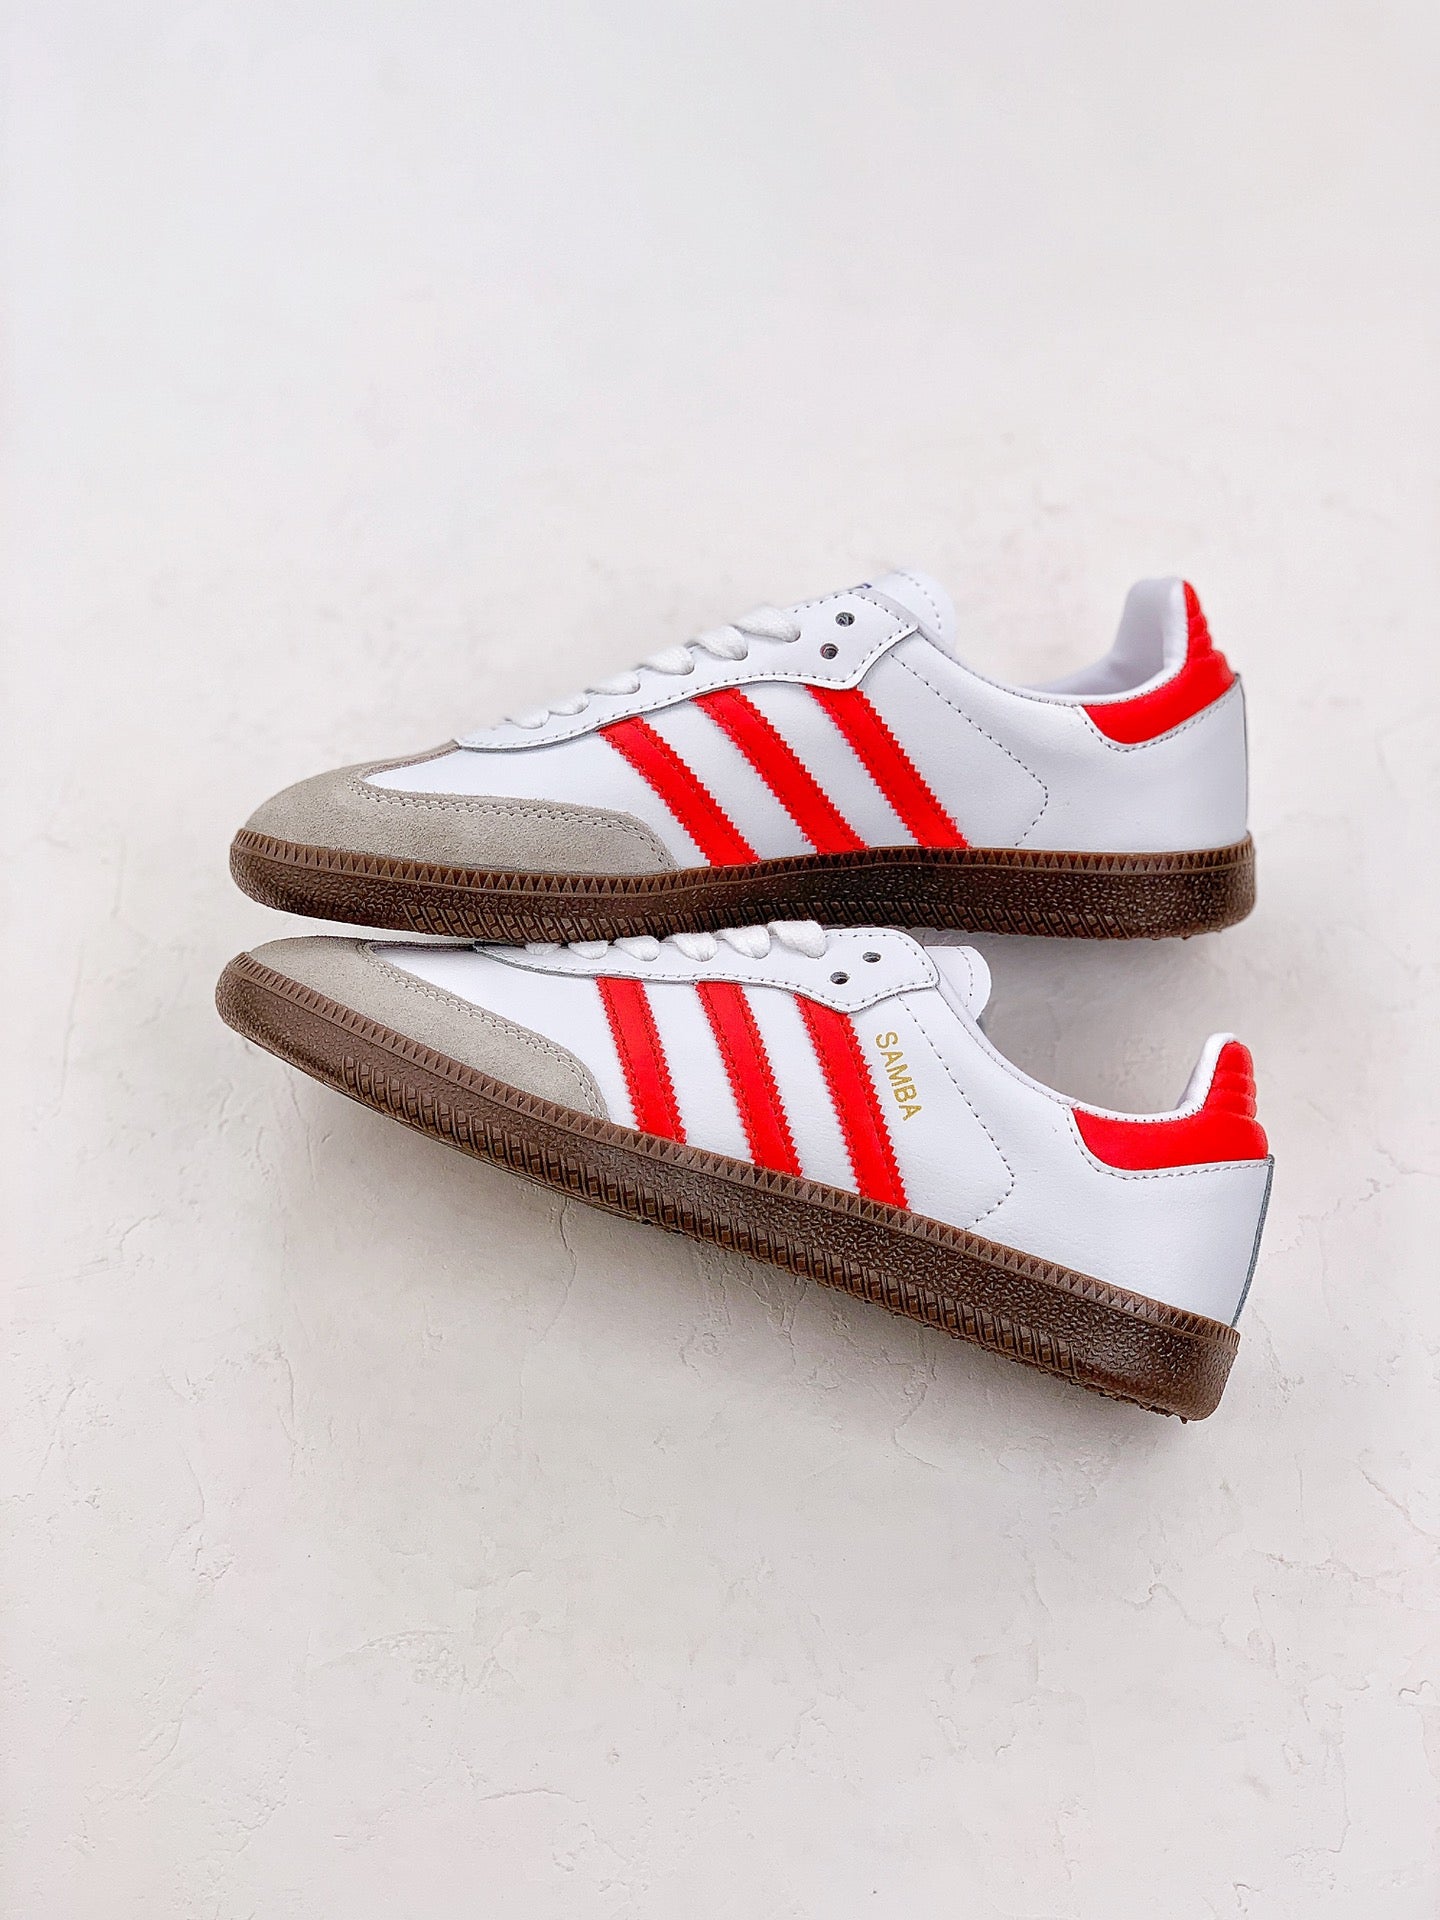 Adidas samba white/red shoes